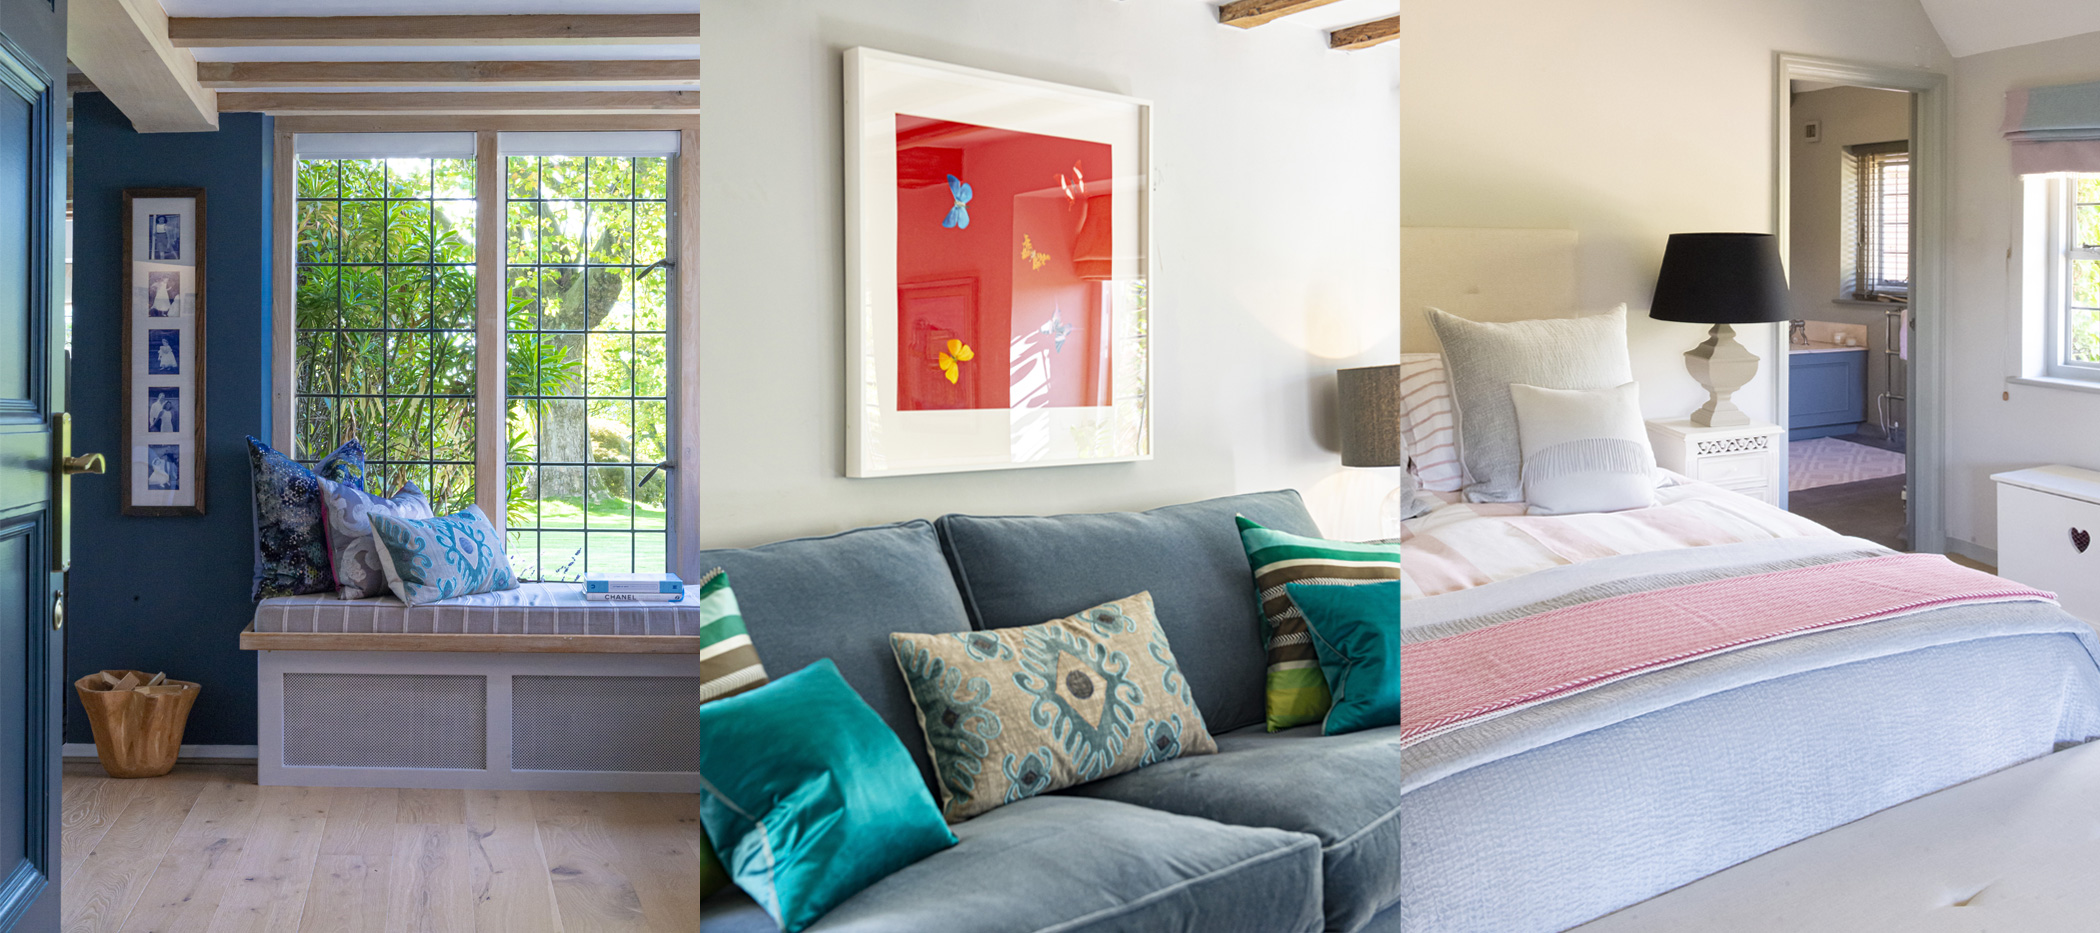 Luxury interior designers in Sussex, Surrey and London